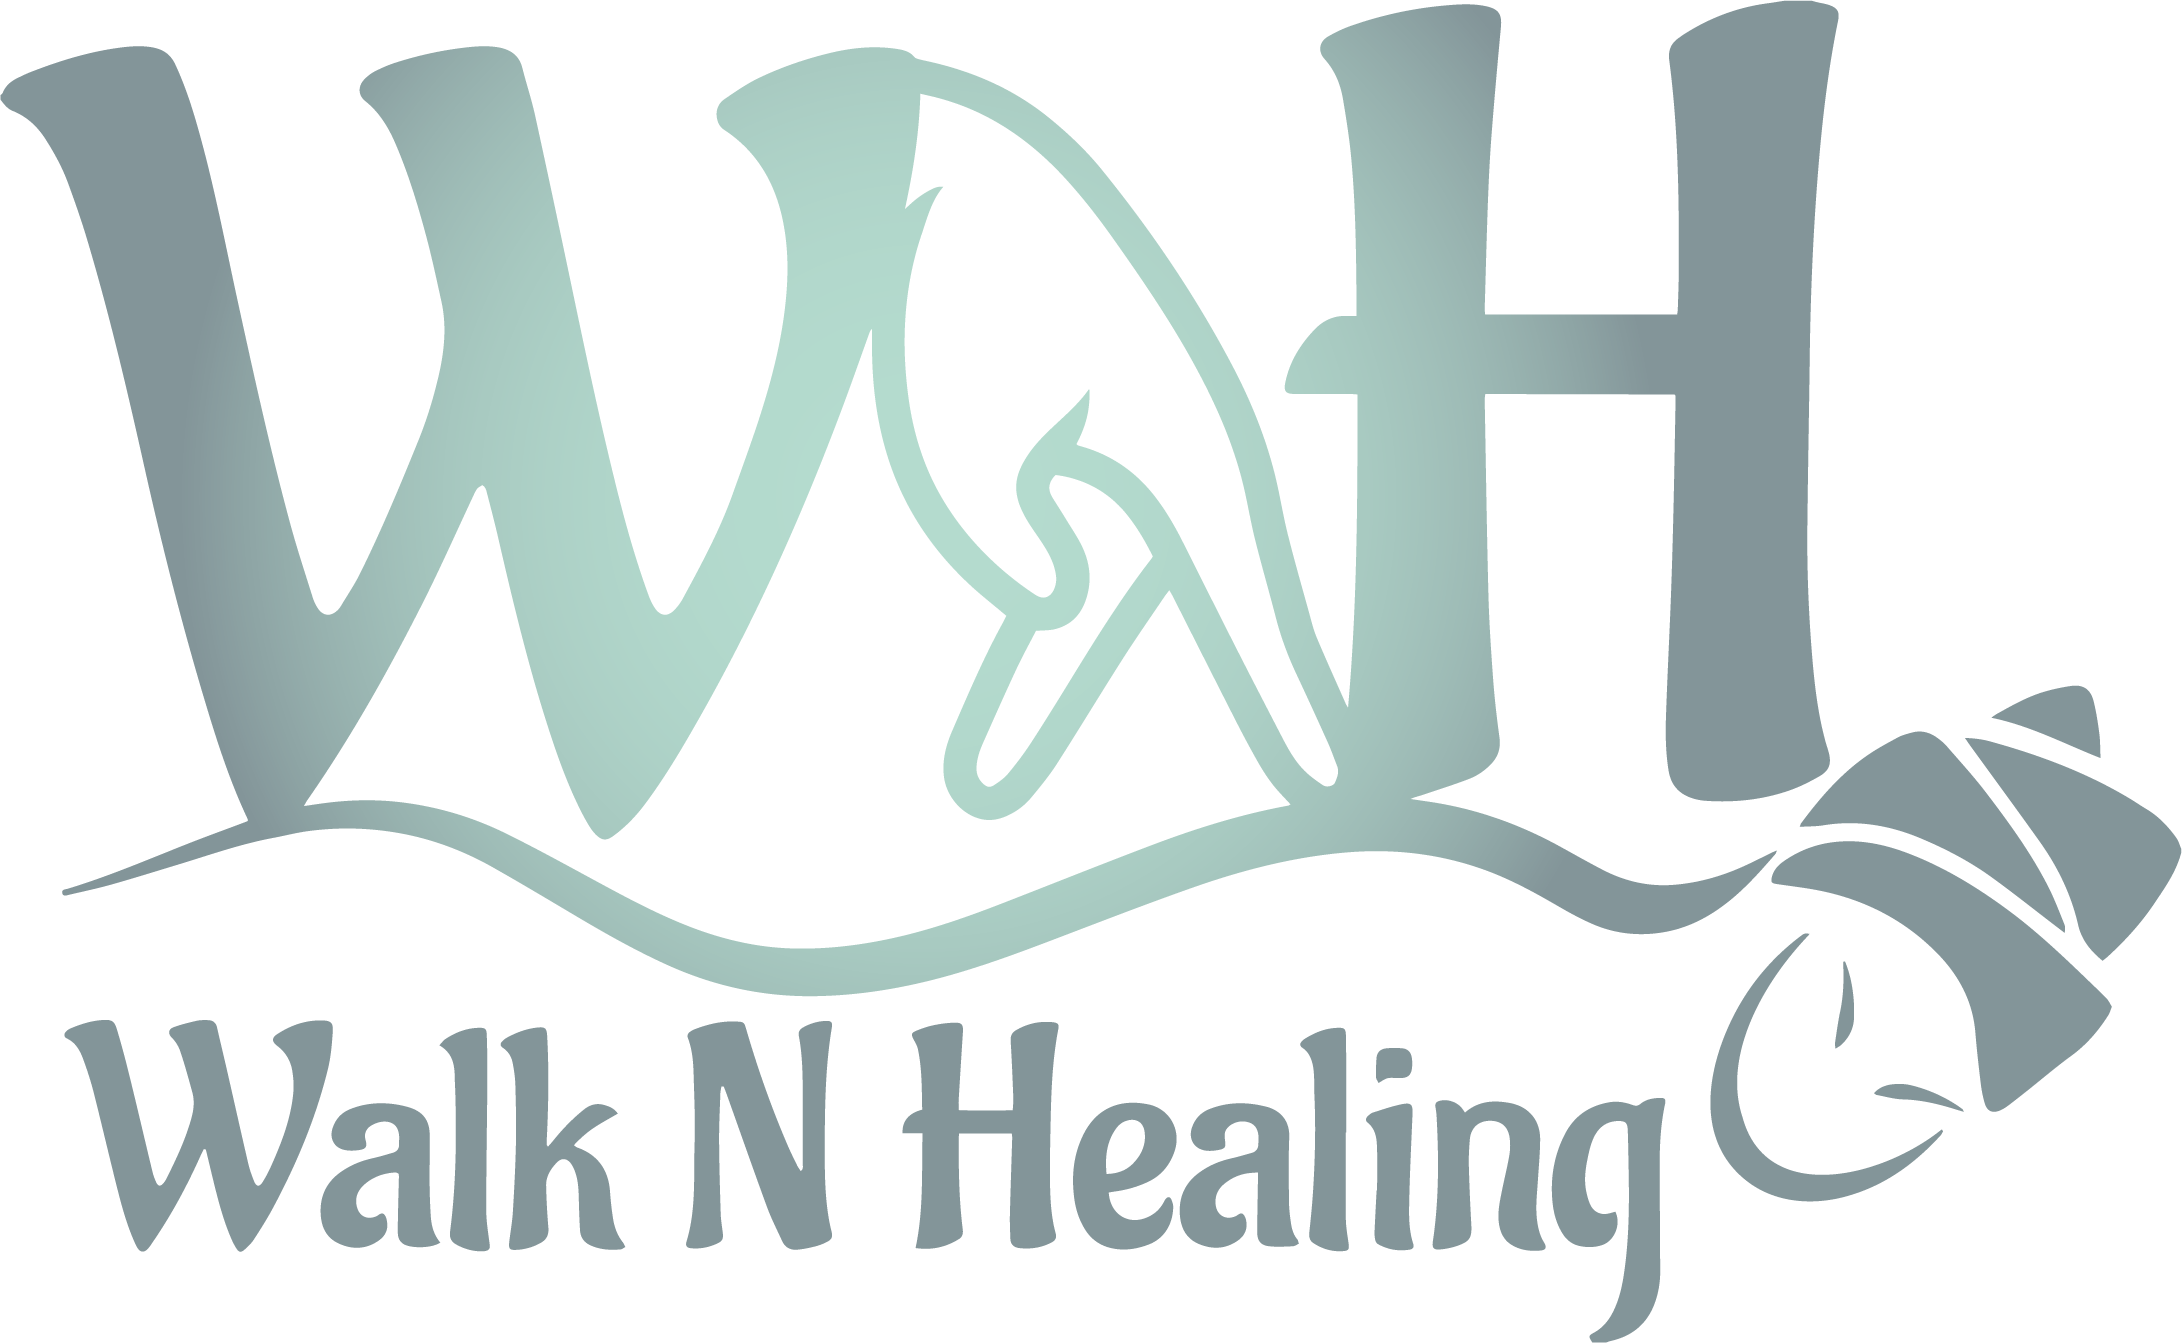 Walk N Healing